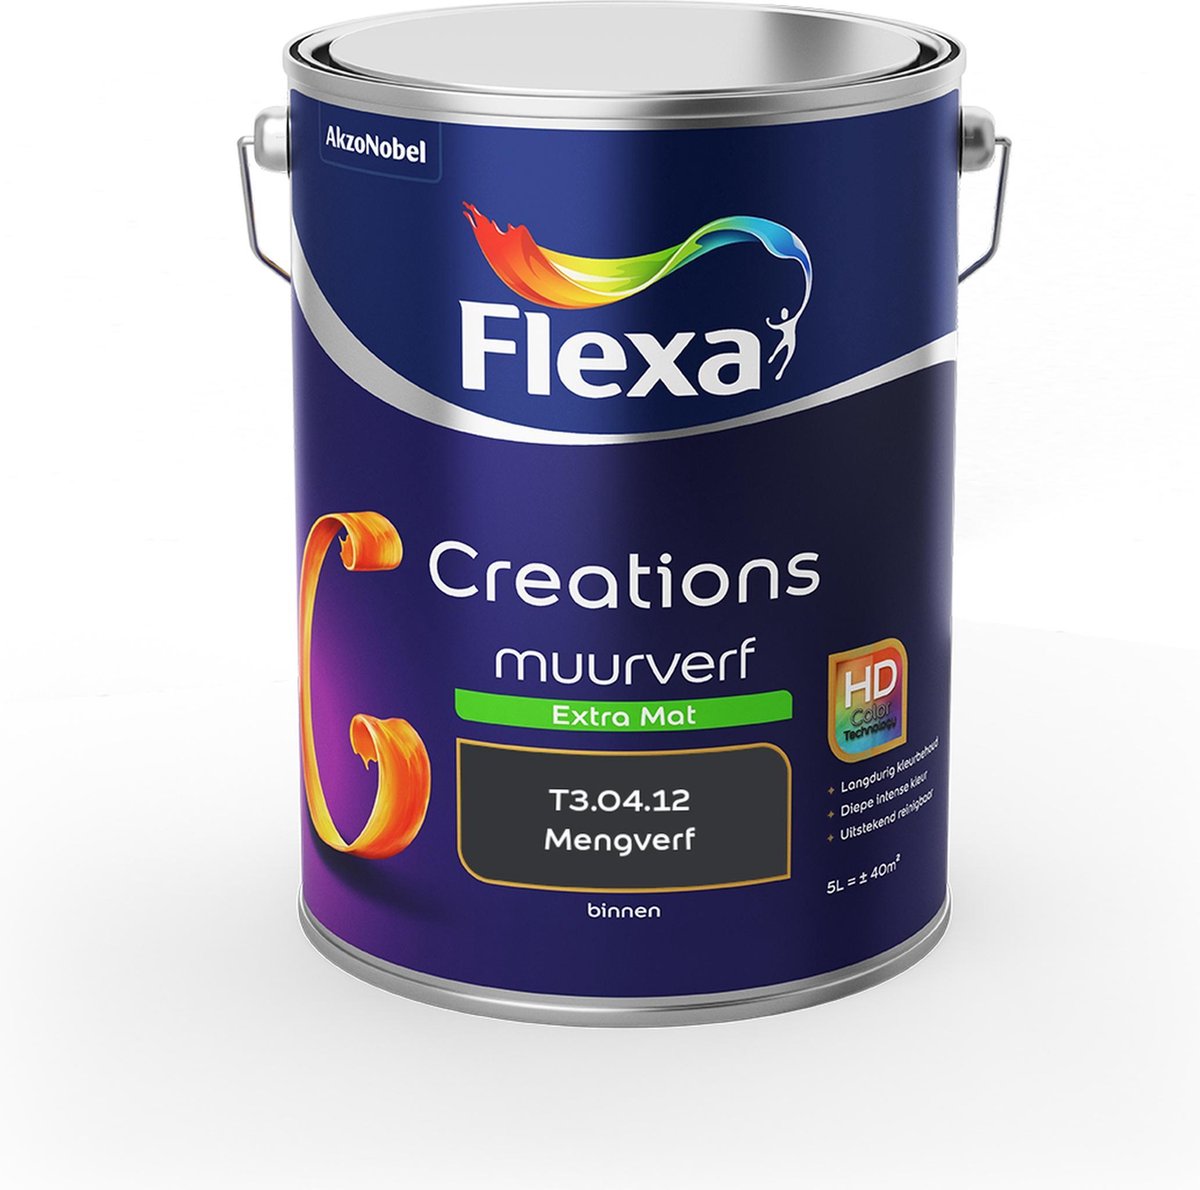 Flexa Creations Muurverf - Extra Mat - Colorfutures 2019 - T3.04.12 - 5 liter